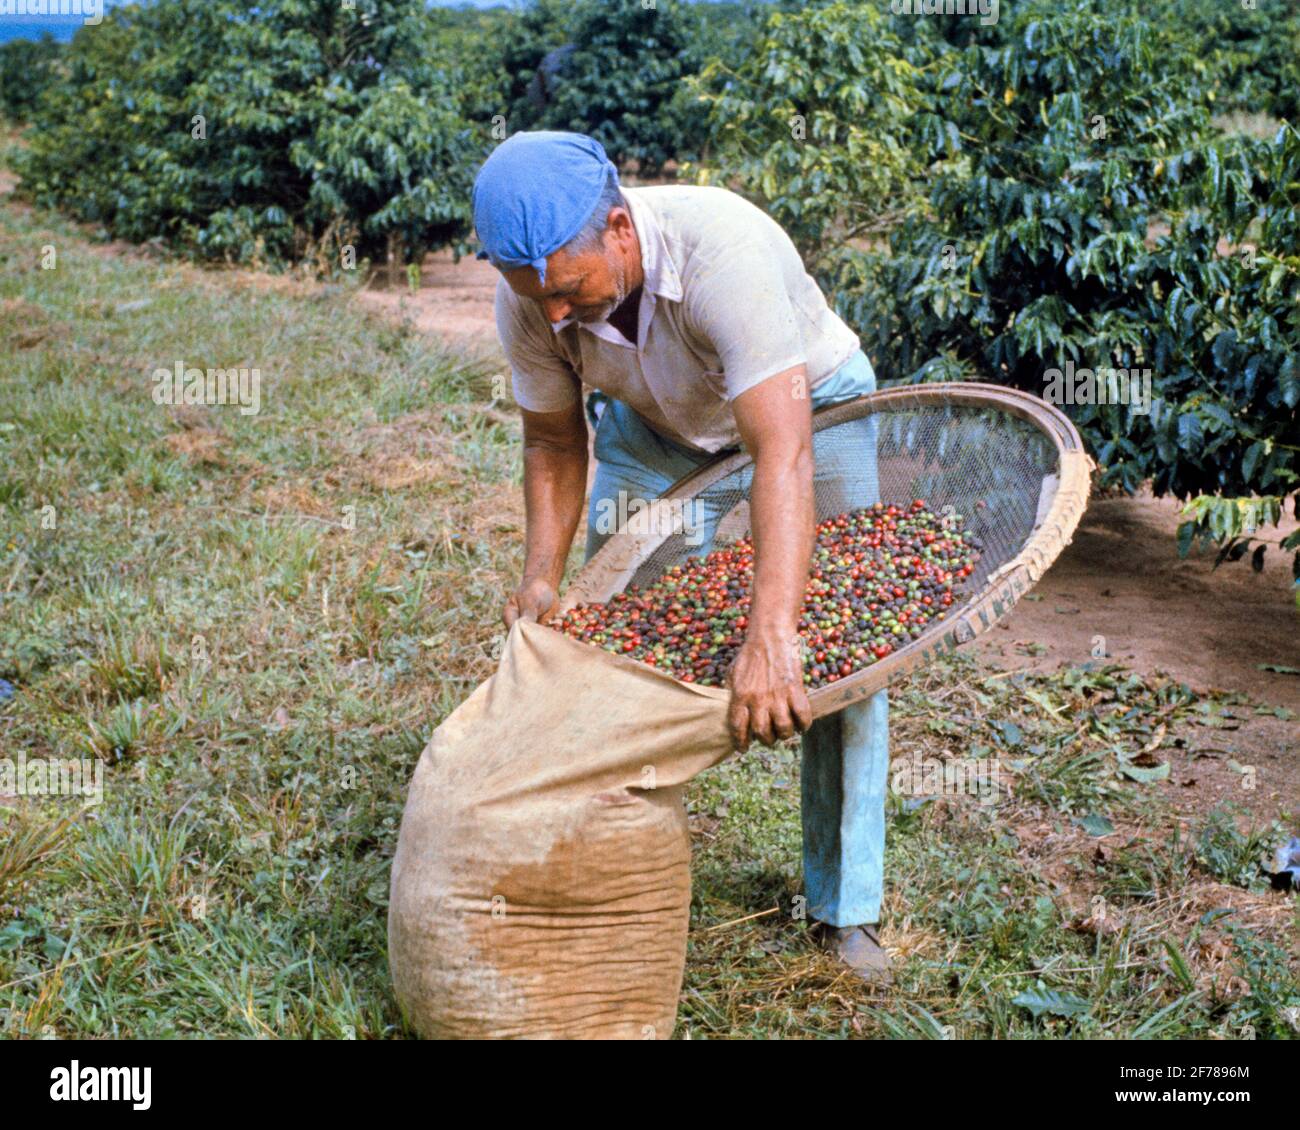 1980s MAN WORKER COFFEE BEAN HARVESTER WORKER IN BRAZIL - kf17986 PHT001 HARS HARVESTER EMPLOYEE BEAN BRAZILIAN HISPANIC ETHNICITY LABORING OLD FASHIONED Stock Photo